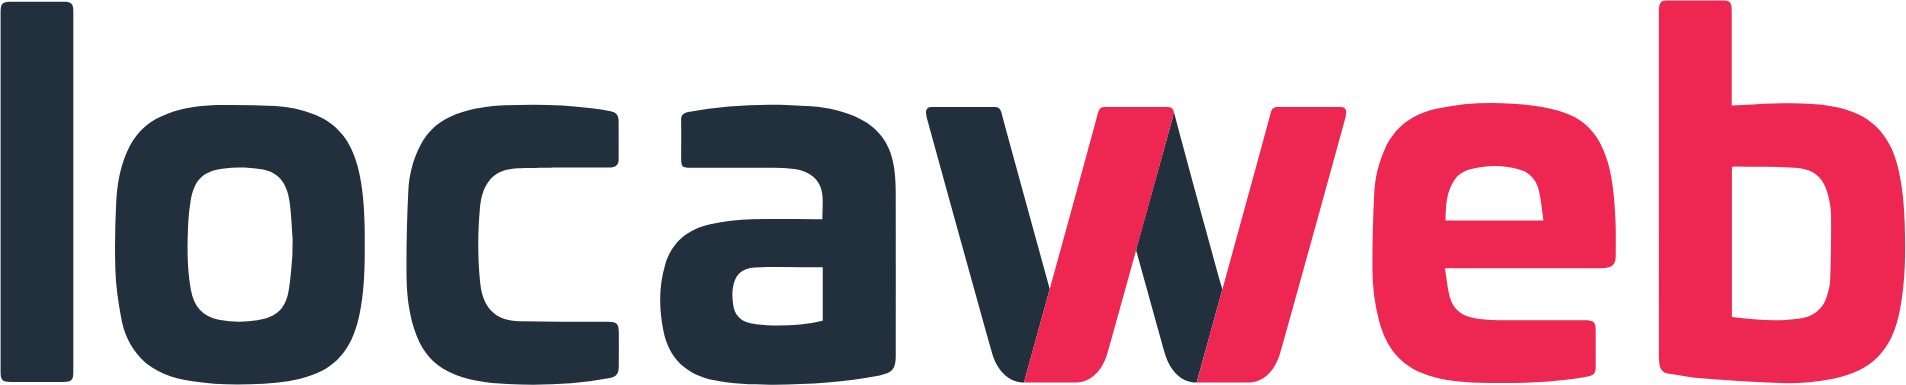 Locaweb logo large (transparent PNG)